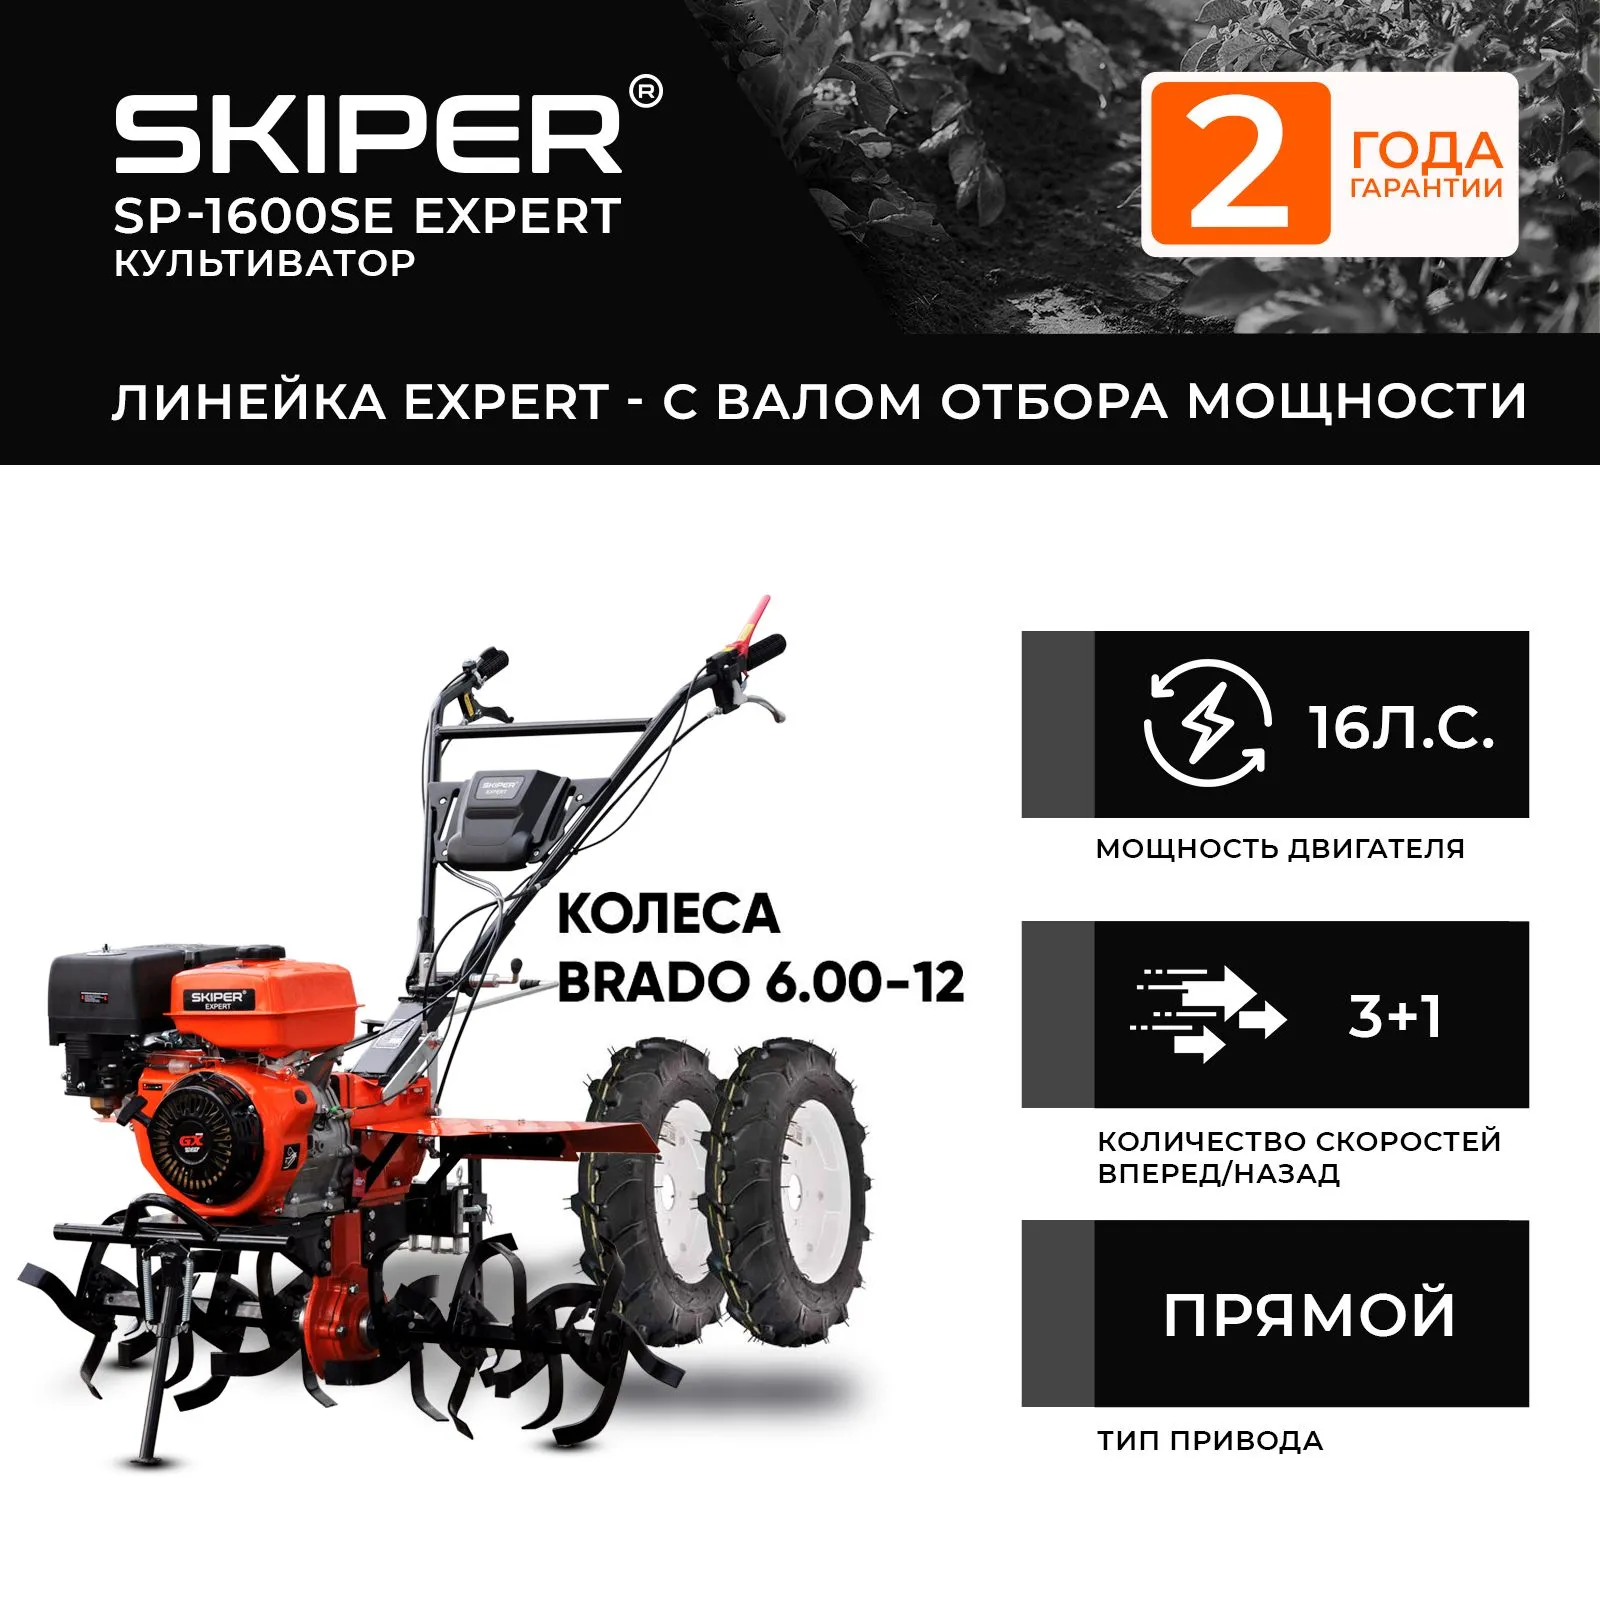 Skiper SP-1600SE EXPERT + колеса Brado 6.00-12 (4812561011823)